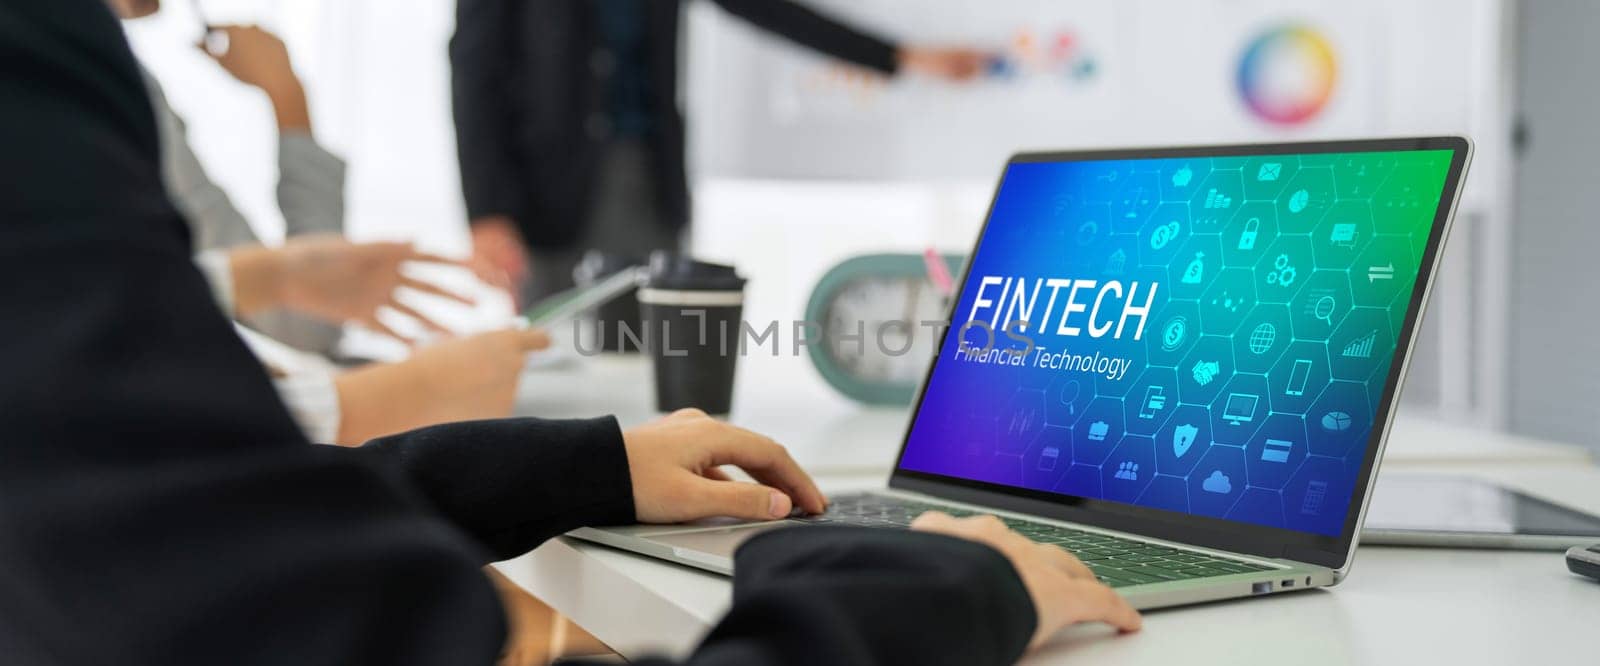 Fintech financial technology software for modish business to analyze marketing strategy